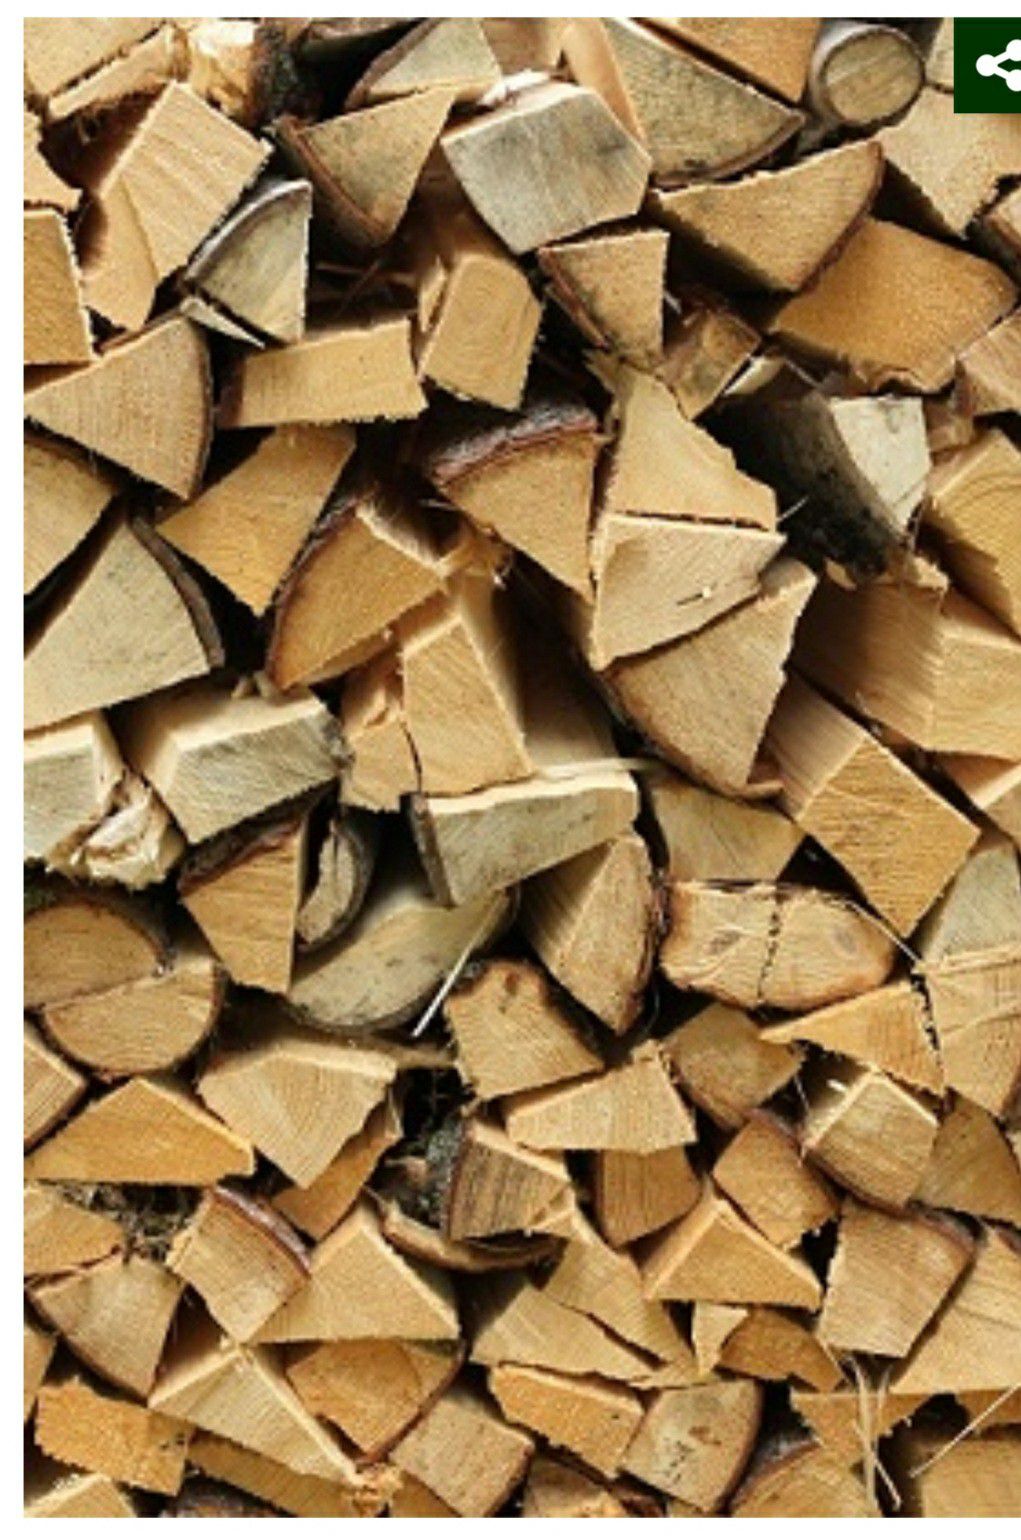 Split and Seasoned Fire wood